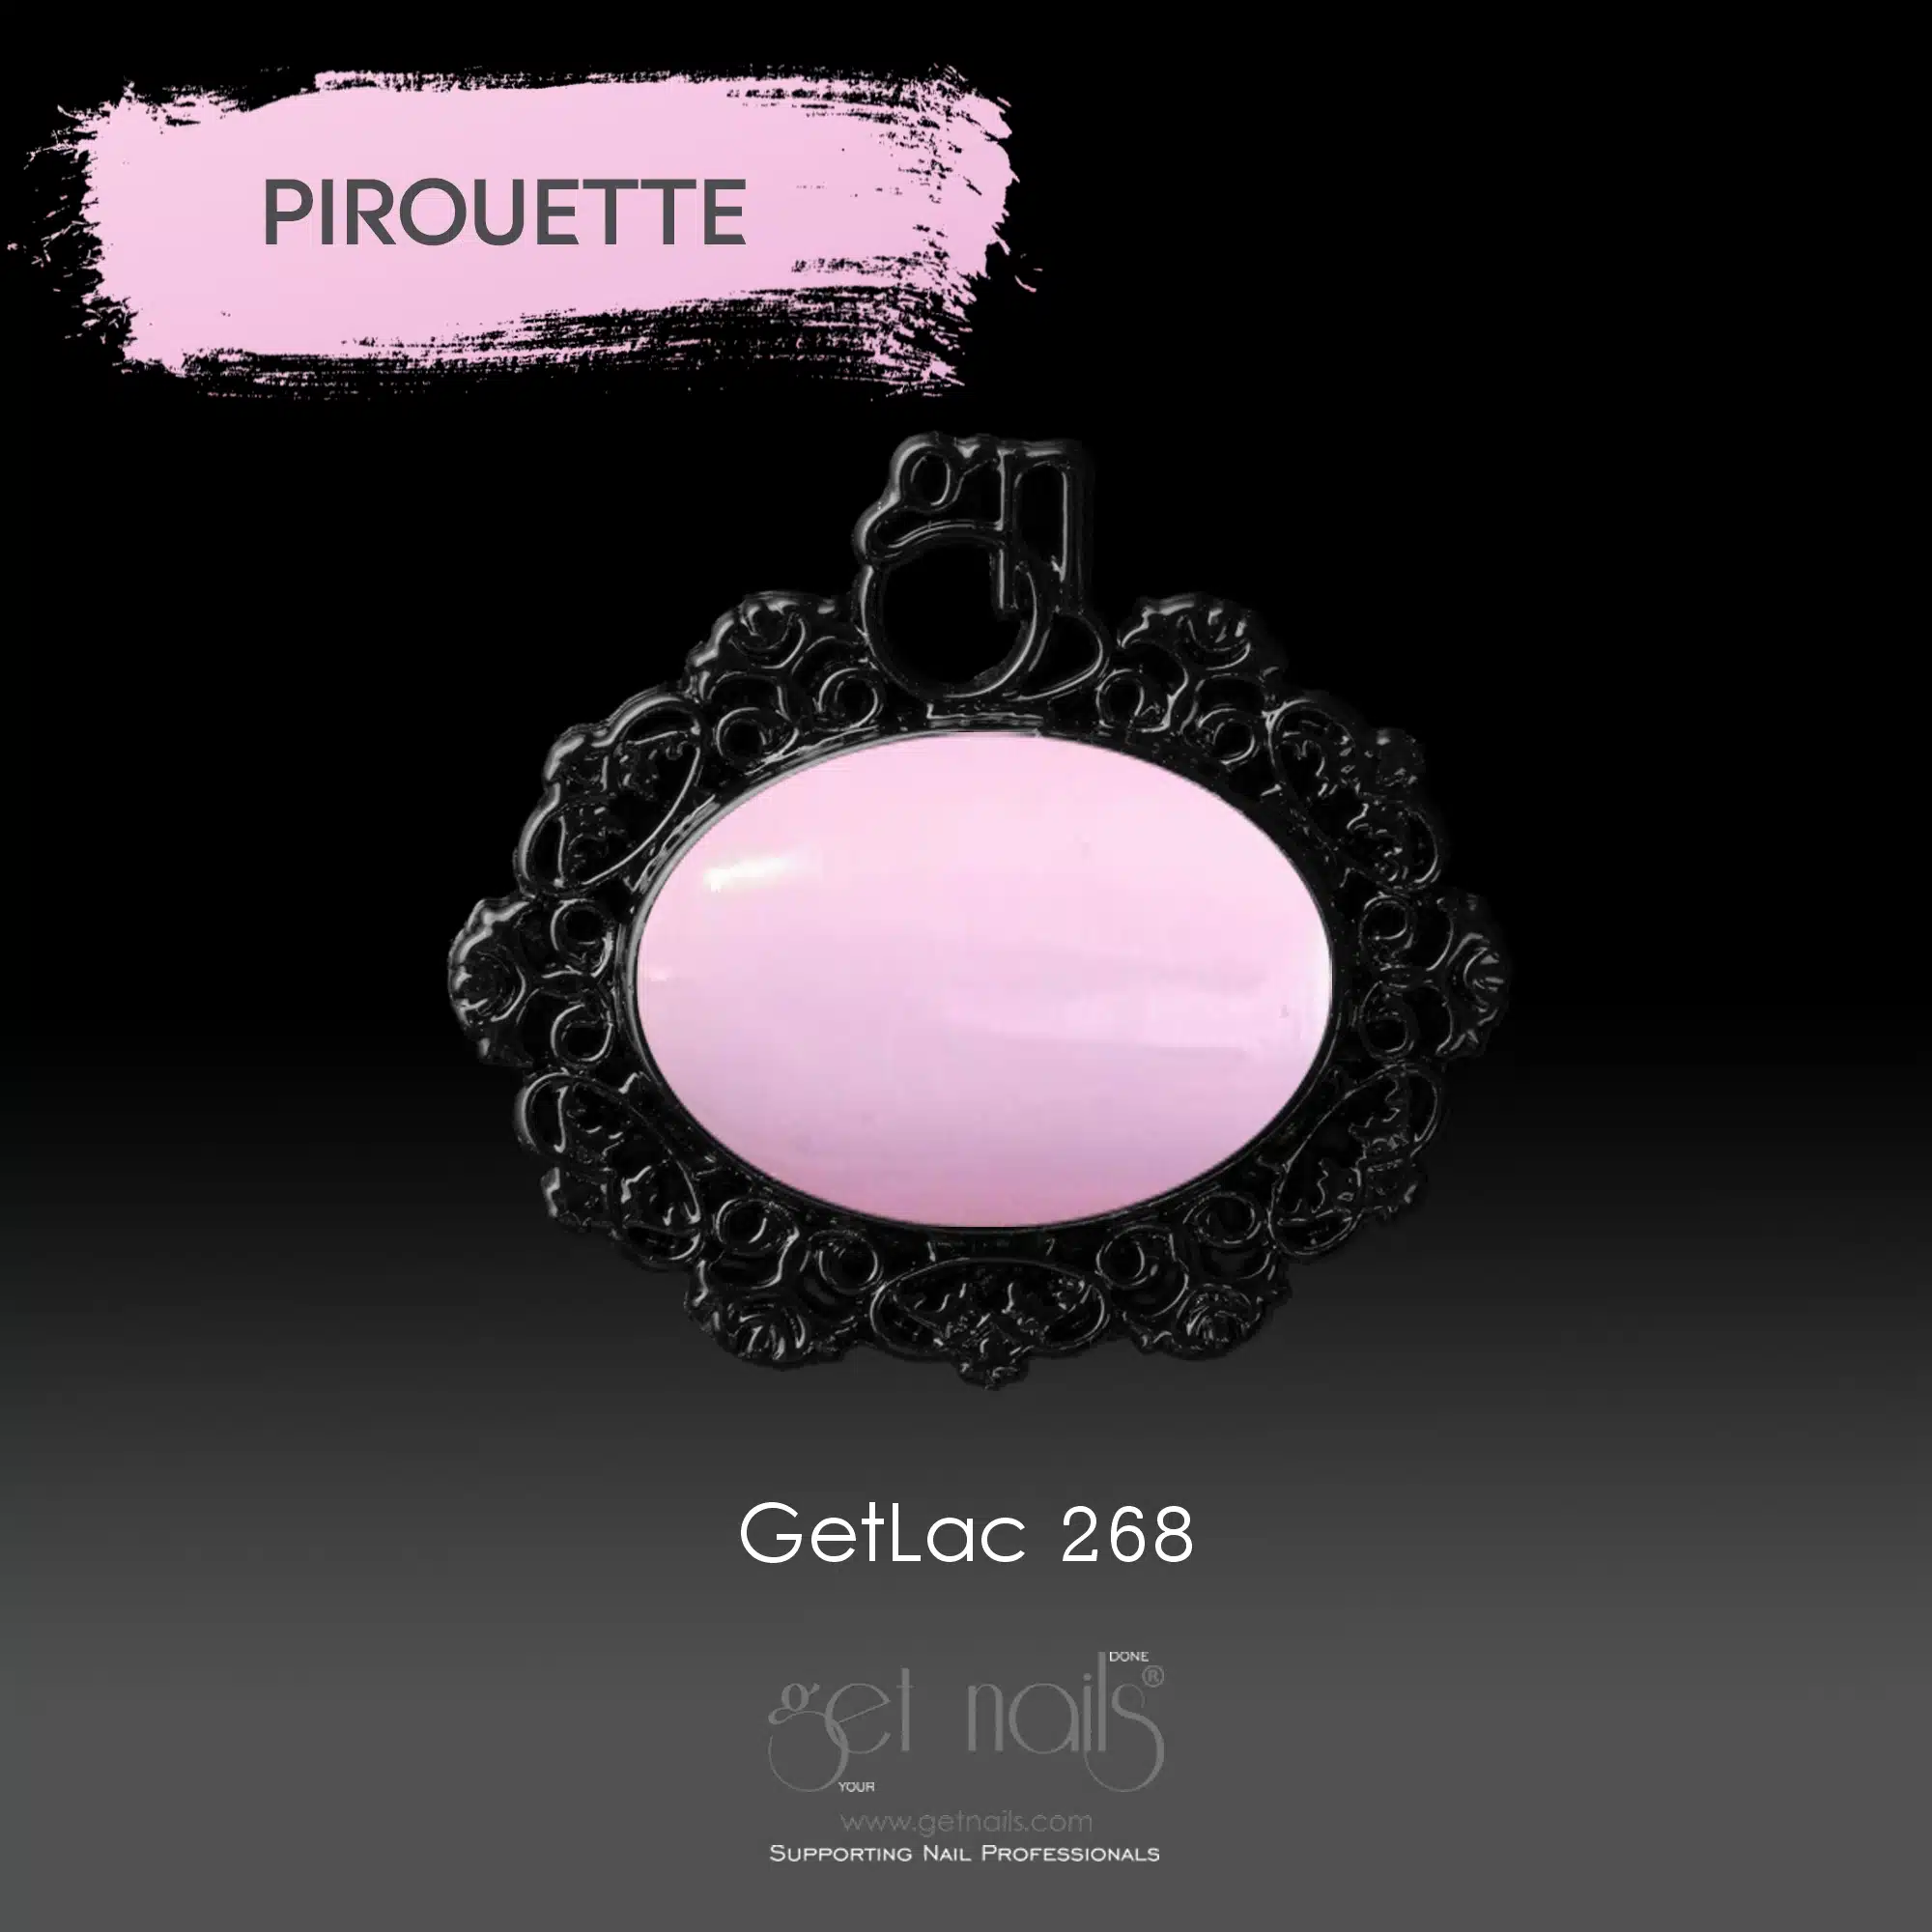 Get Nails Austria - GetLac 268 15g Pirouette